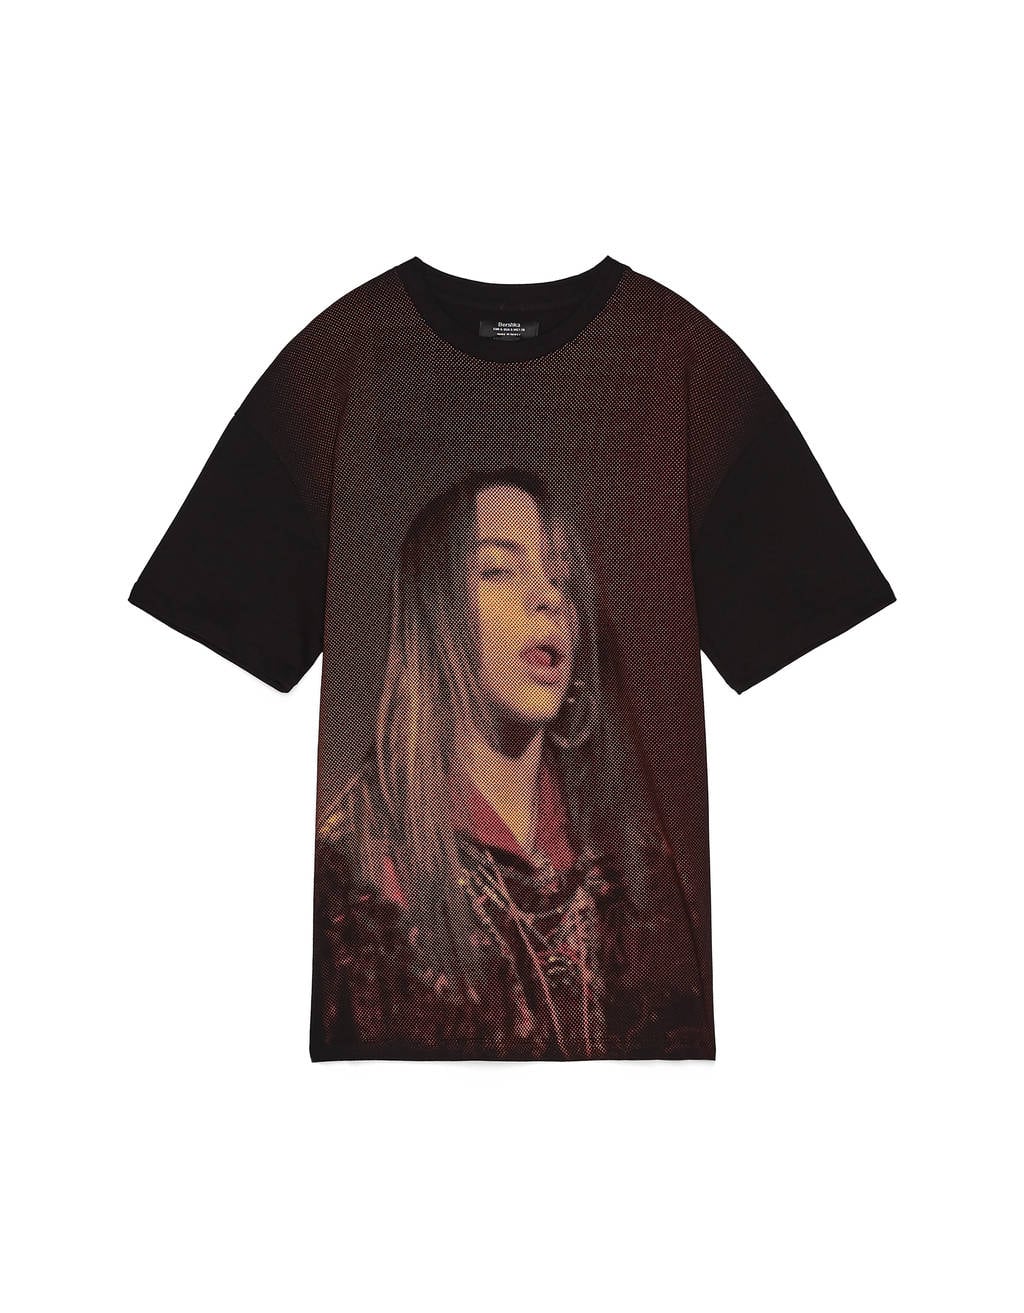 Billie Eilish x Bershka T-Shirt | Don't Sleep on It — Billie 